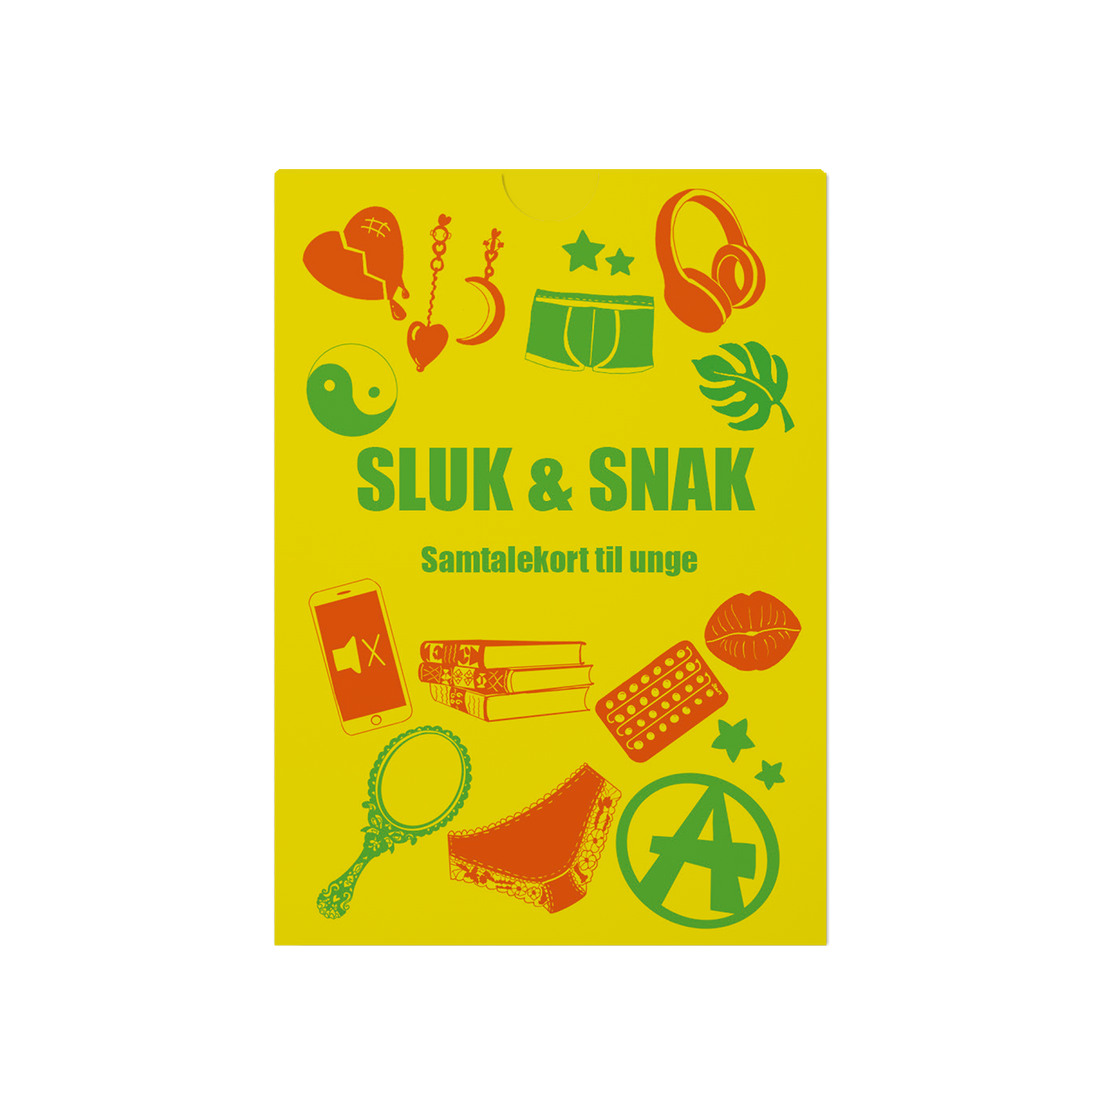 SLUK &amp; SNAK - Samtalekort til unge om ungdomslivet - sluk telefonen og start en samtale